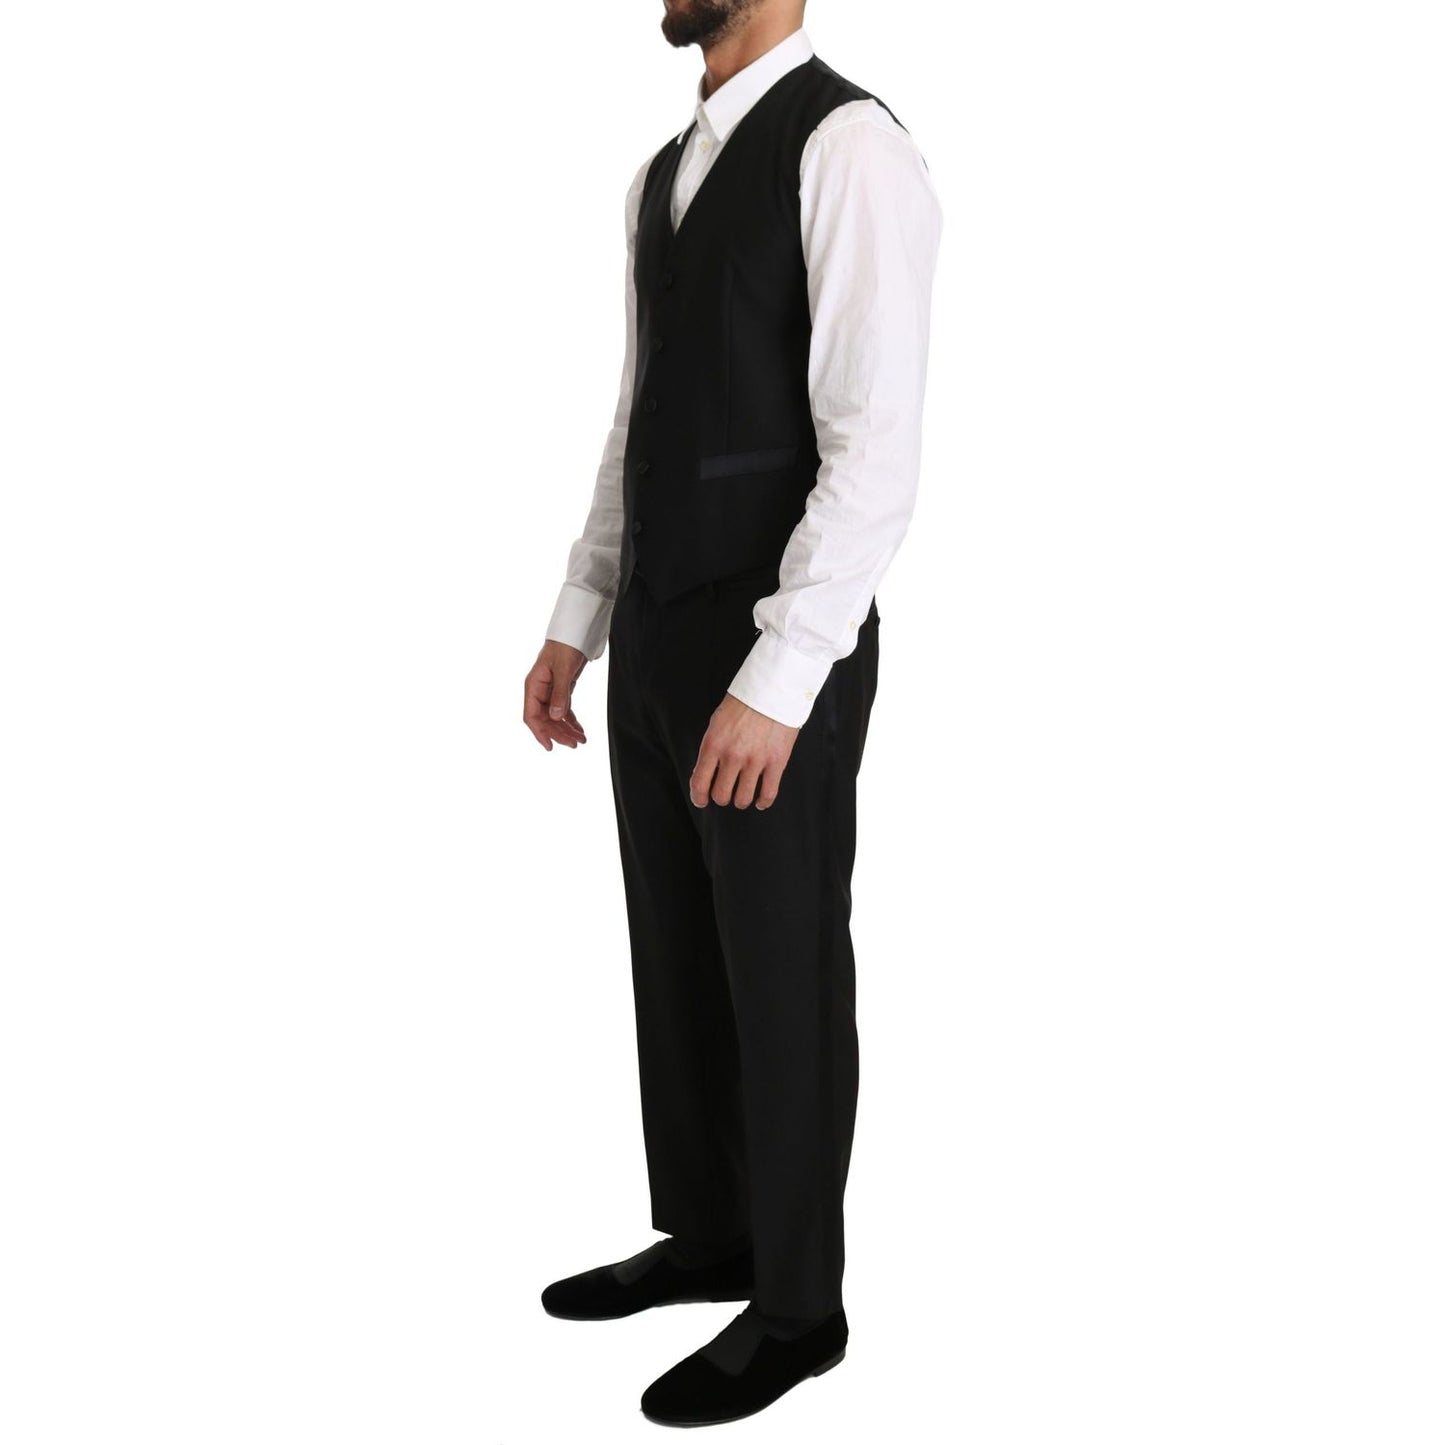 Dolce & Gabbana Sleek Black Slim Fit Formal Vest black-wool-dress-waistcoat-gillet-vest IMG_2984-scaled-3fa8909b-b87.jpg